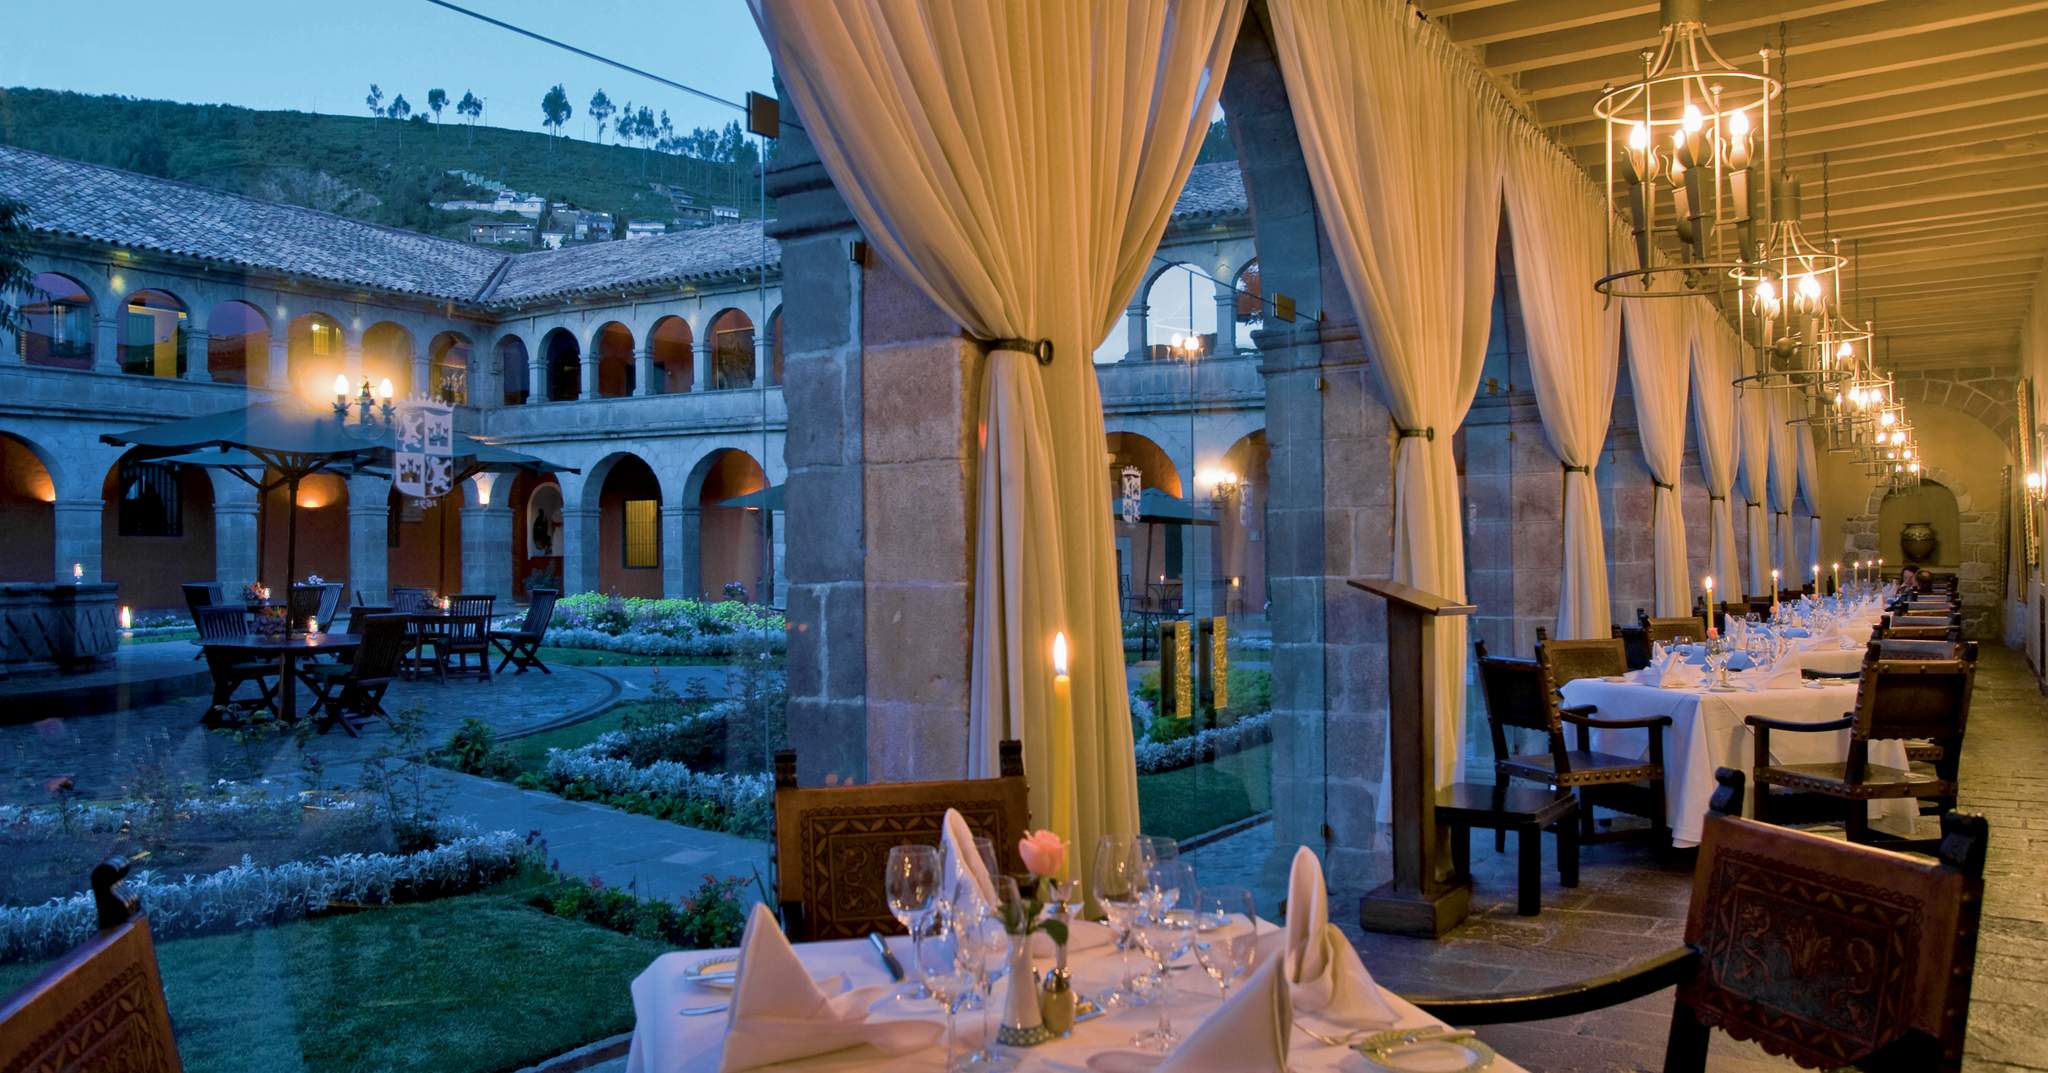 Belmond Hotel Monasterio, Peru